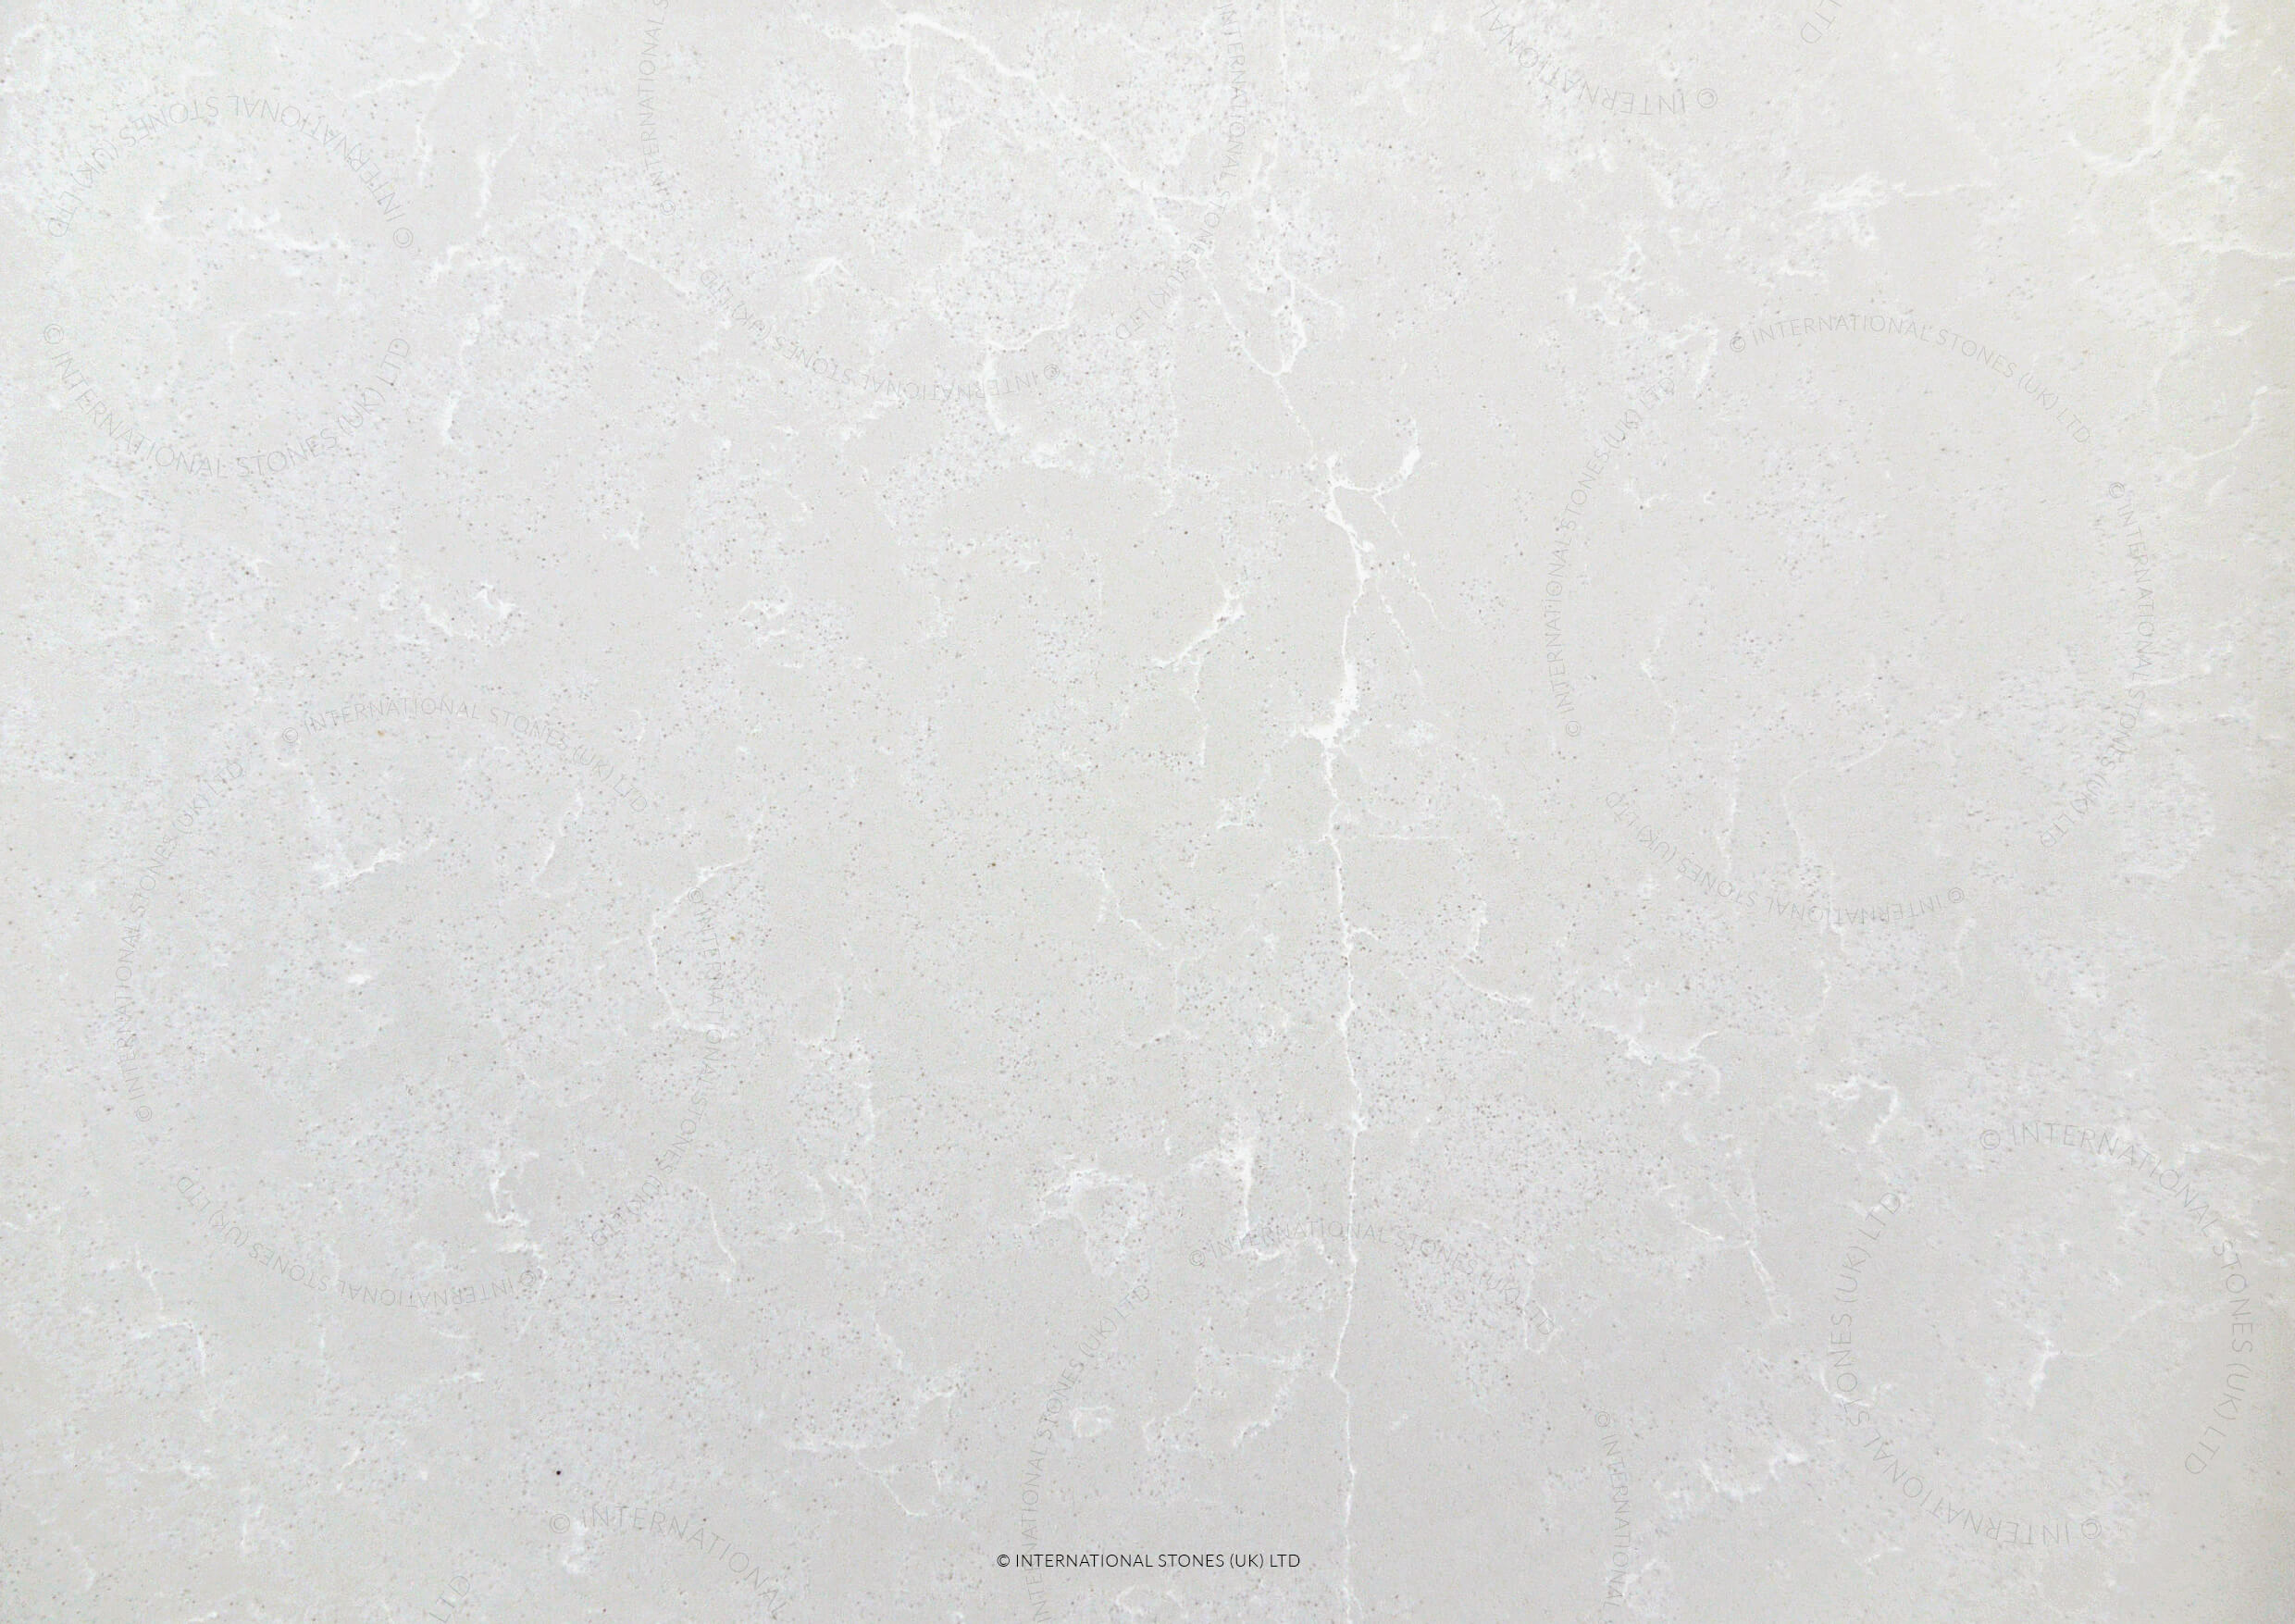 International Stone IQ Desert Silver - Rutland - Barleythorpe